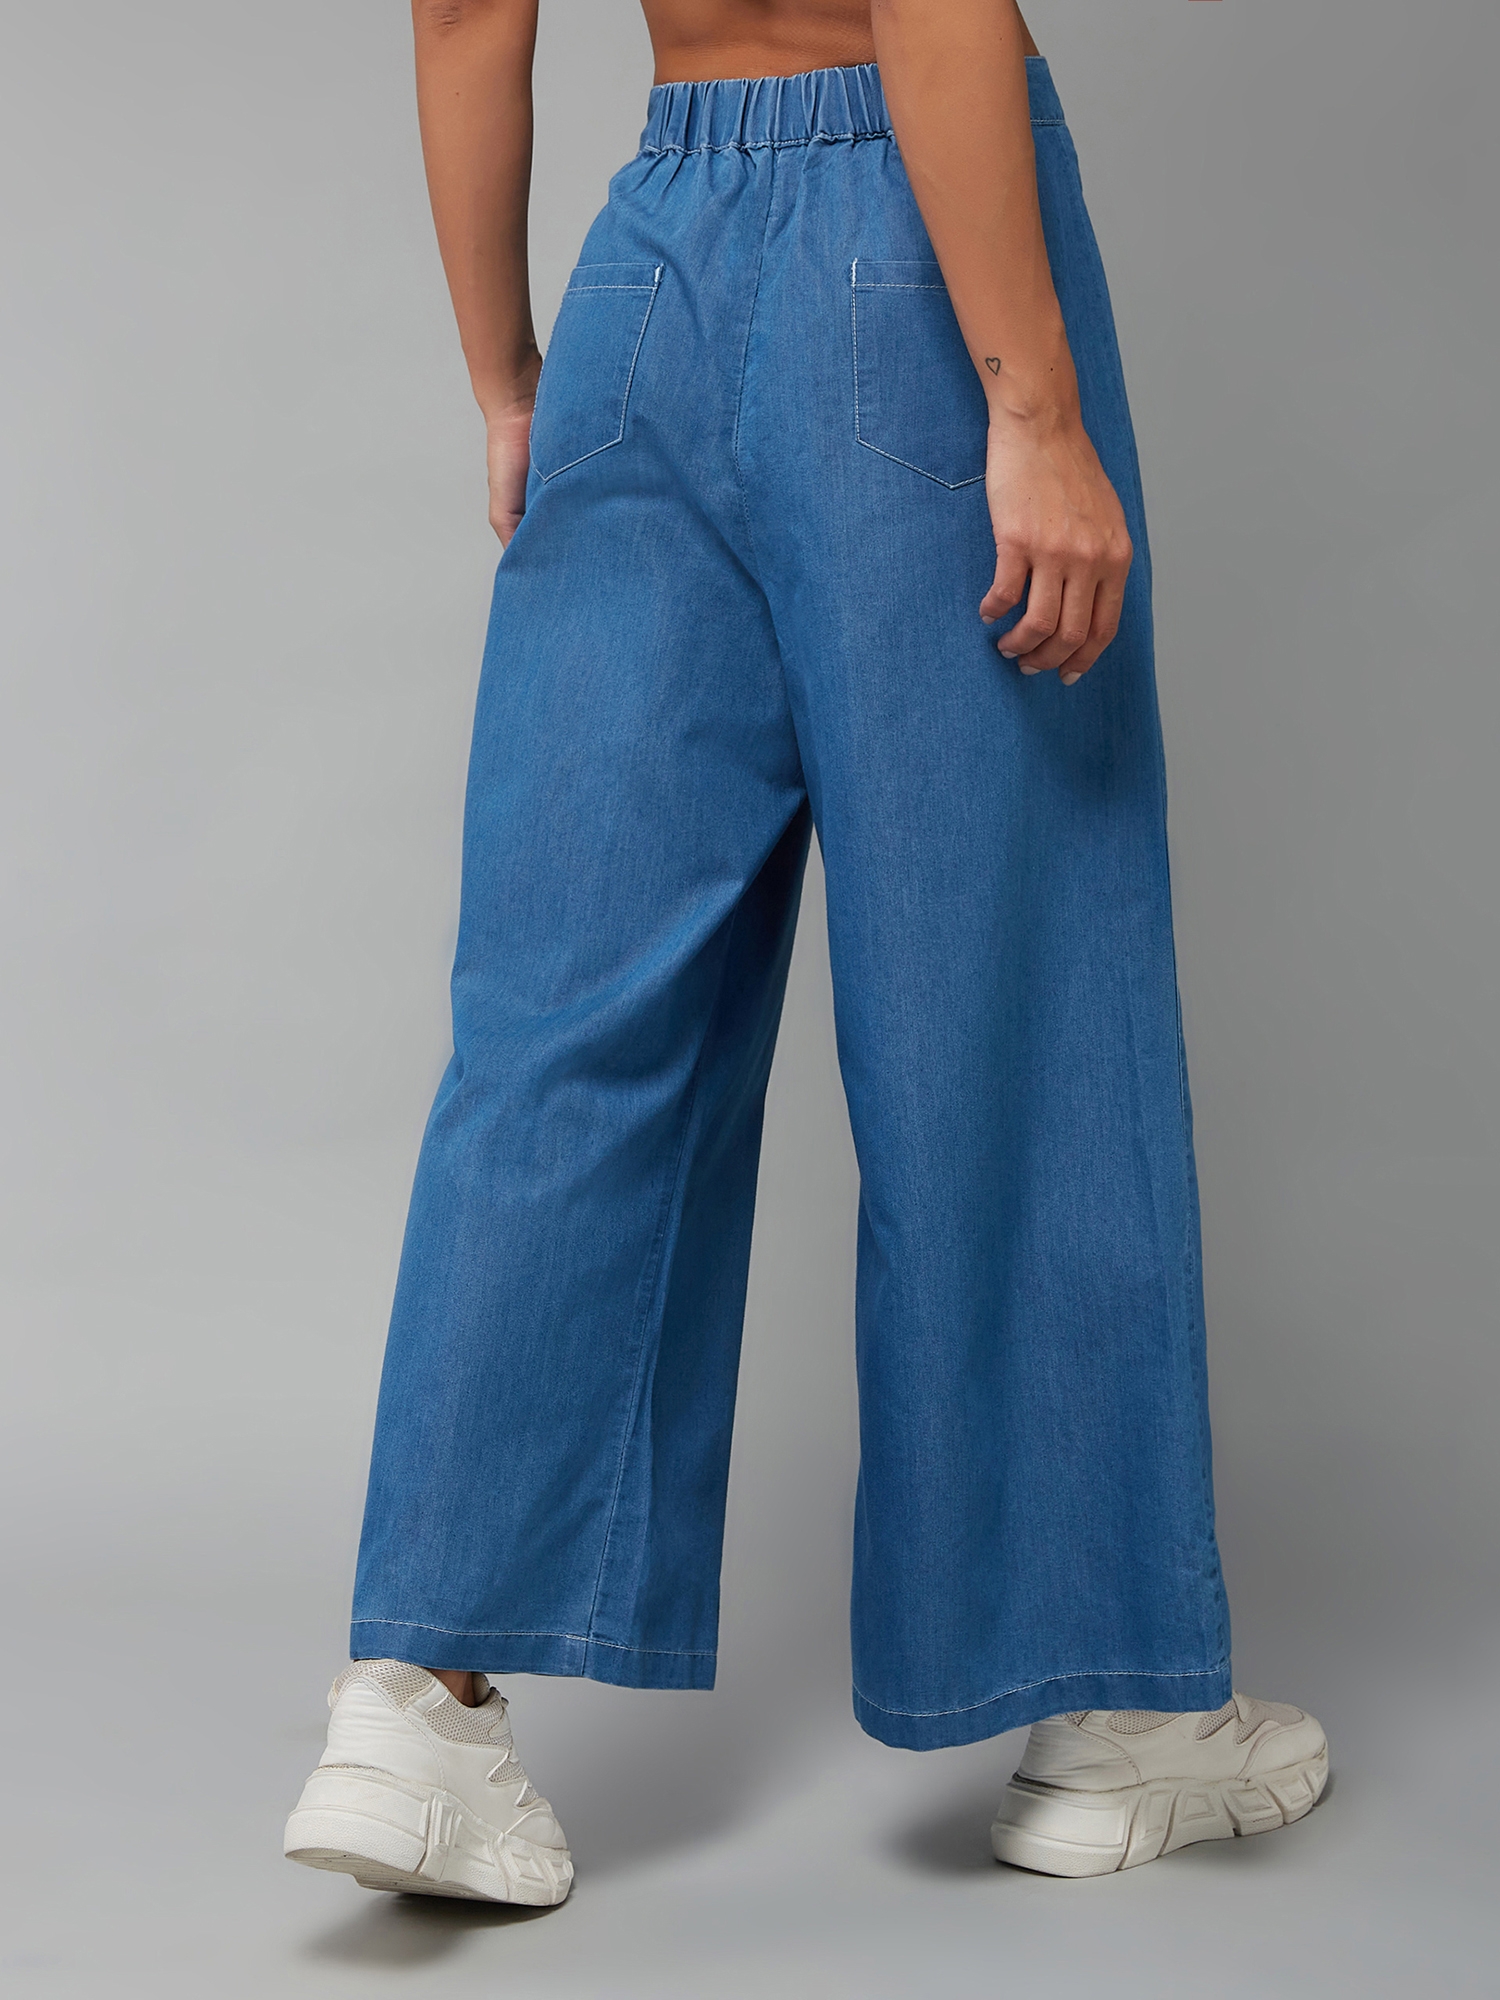 Straight Leg Jeans for Women Denim Pants High Waisted Boyfriend Stretch  Baggy Casual Petite Relaxed Fit Ankle Slacks (L, Light Blue-A) - Walmart.com